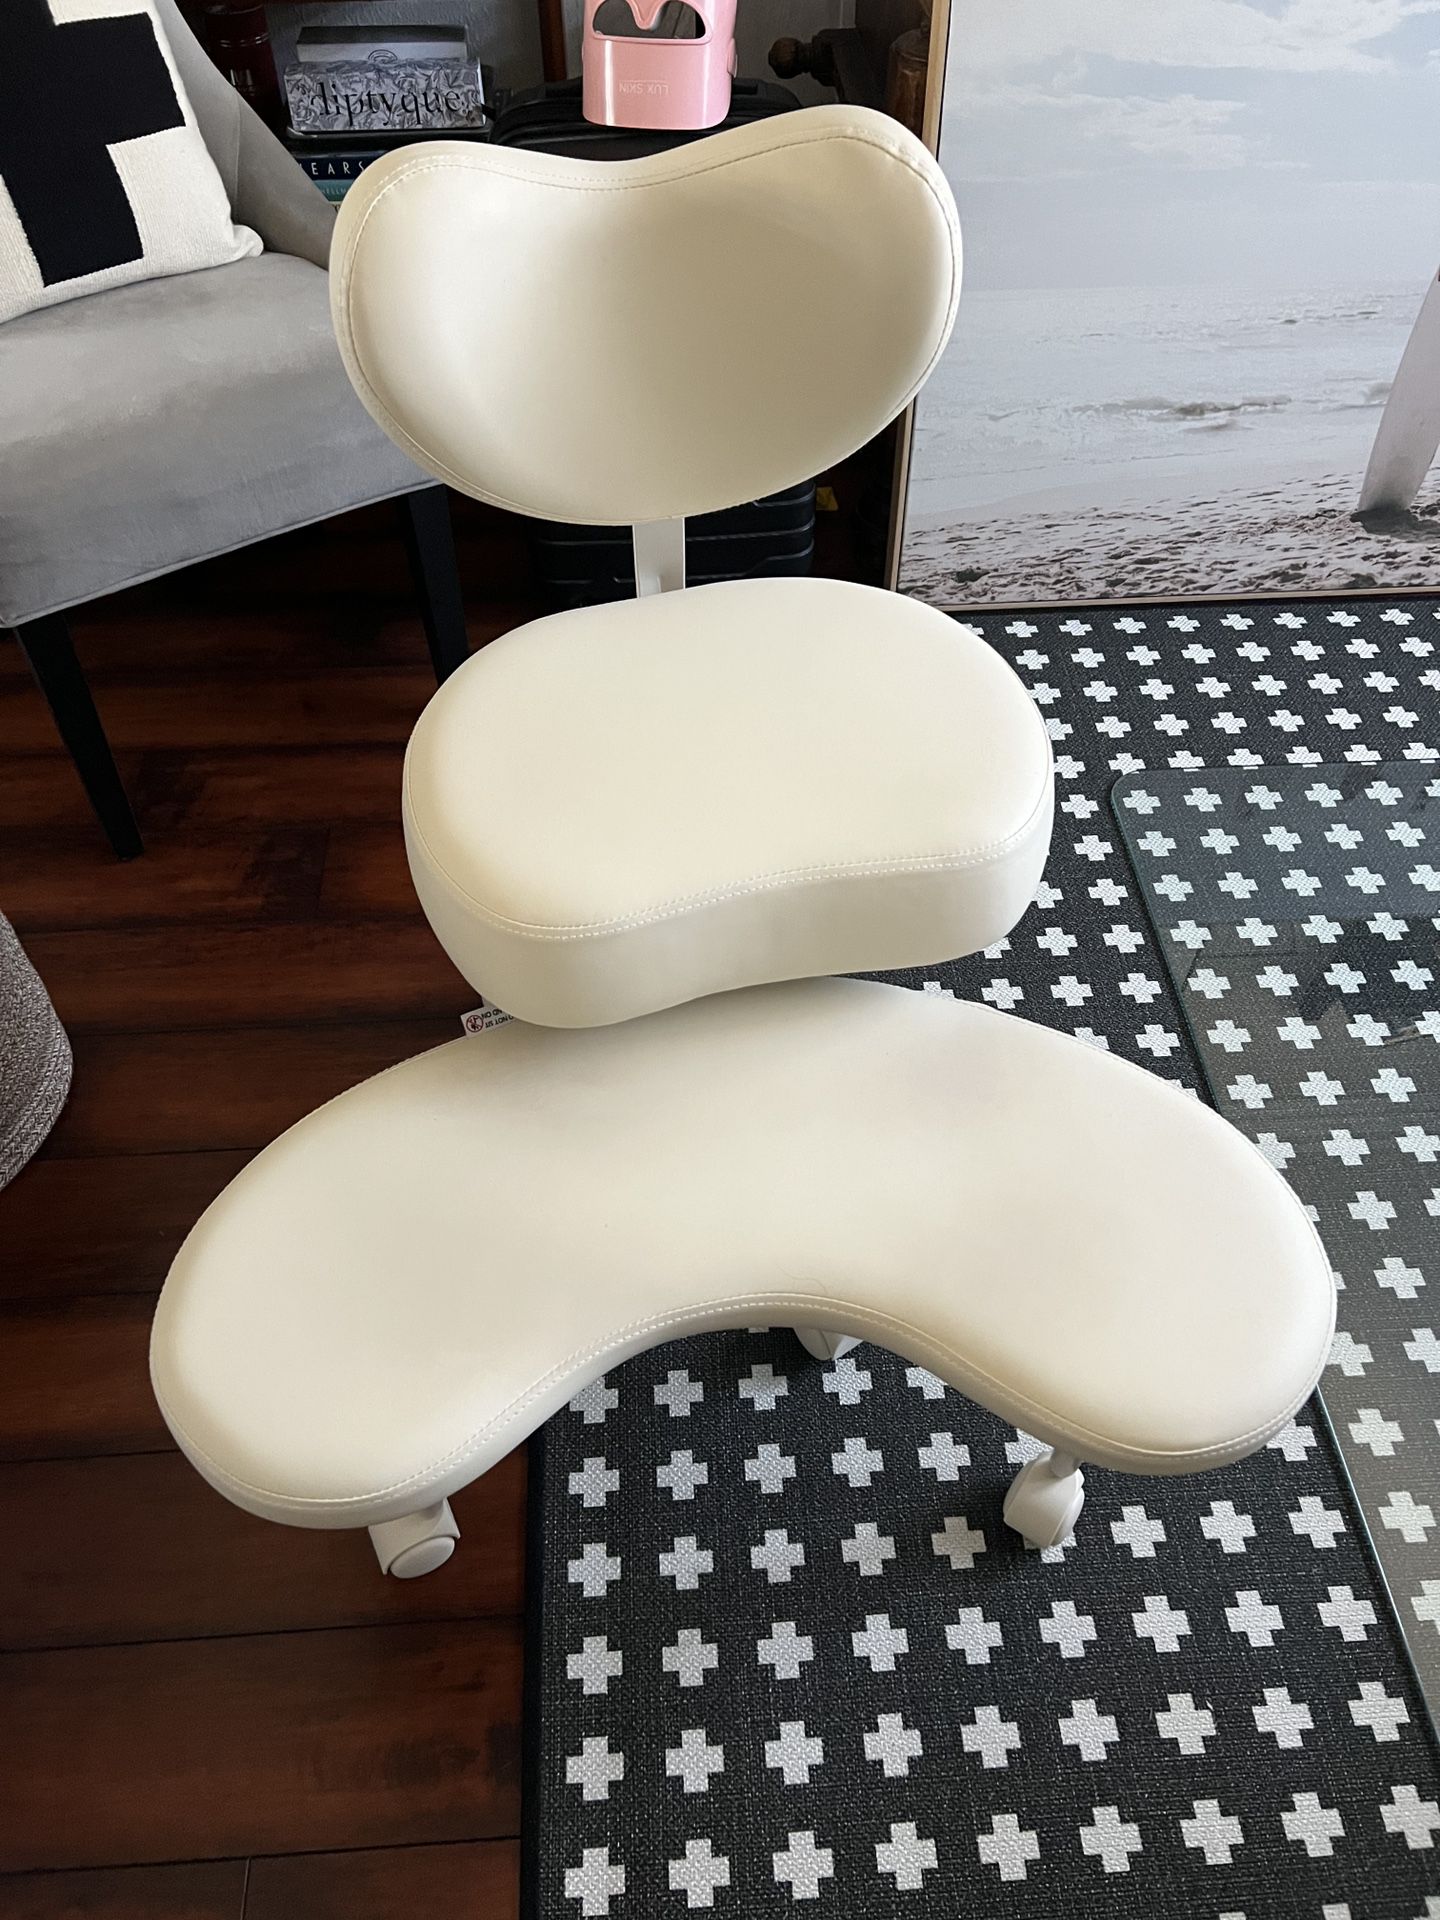 Pipersong Meditation Chair - Regular